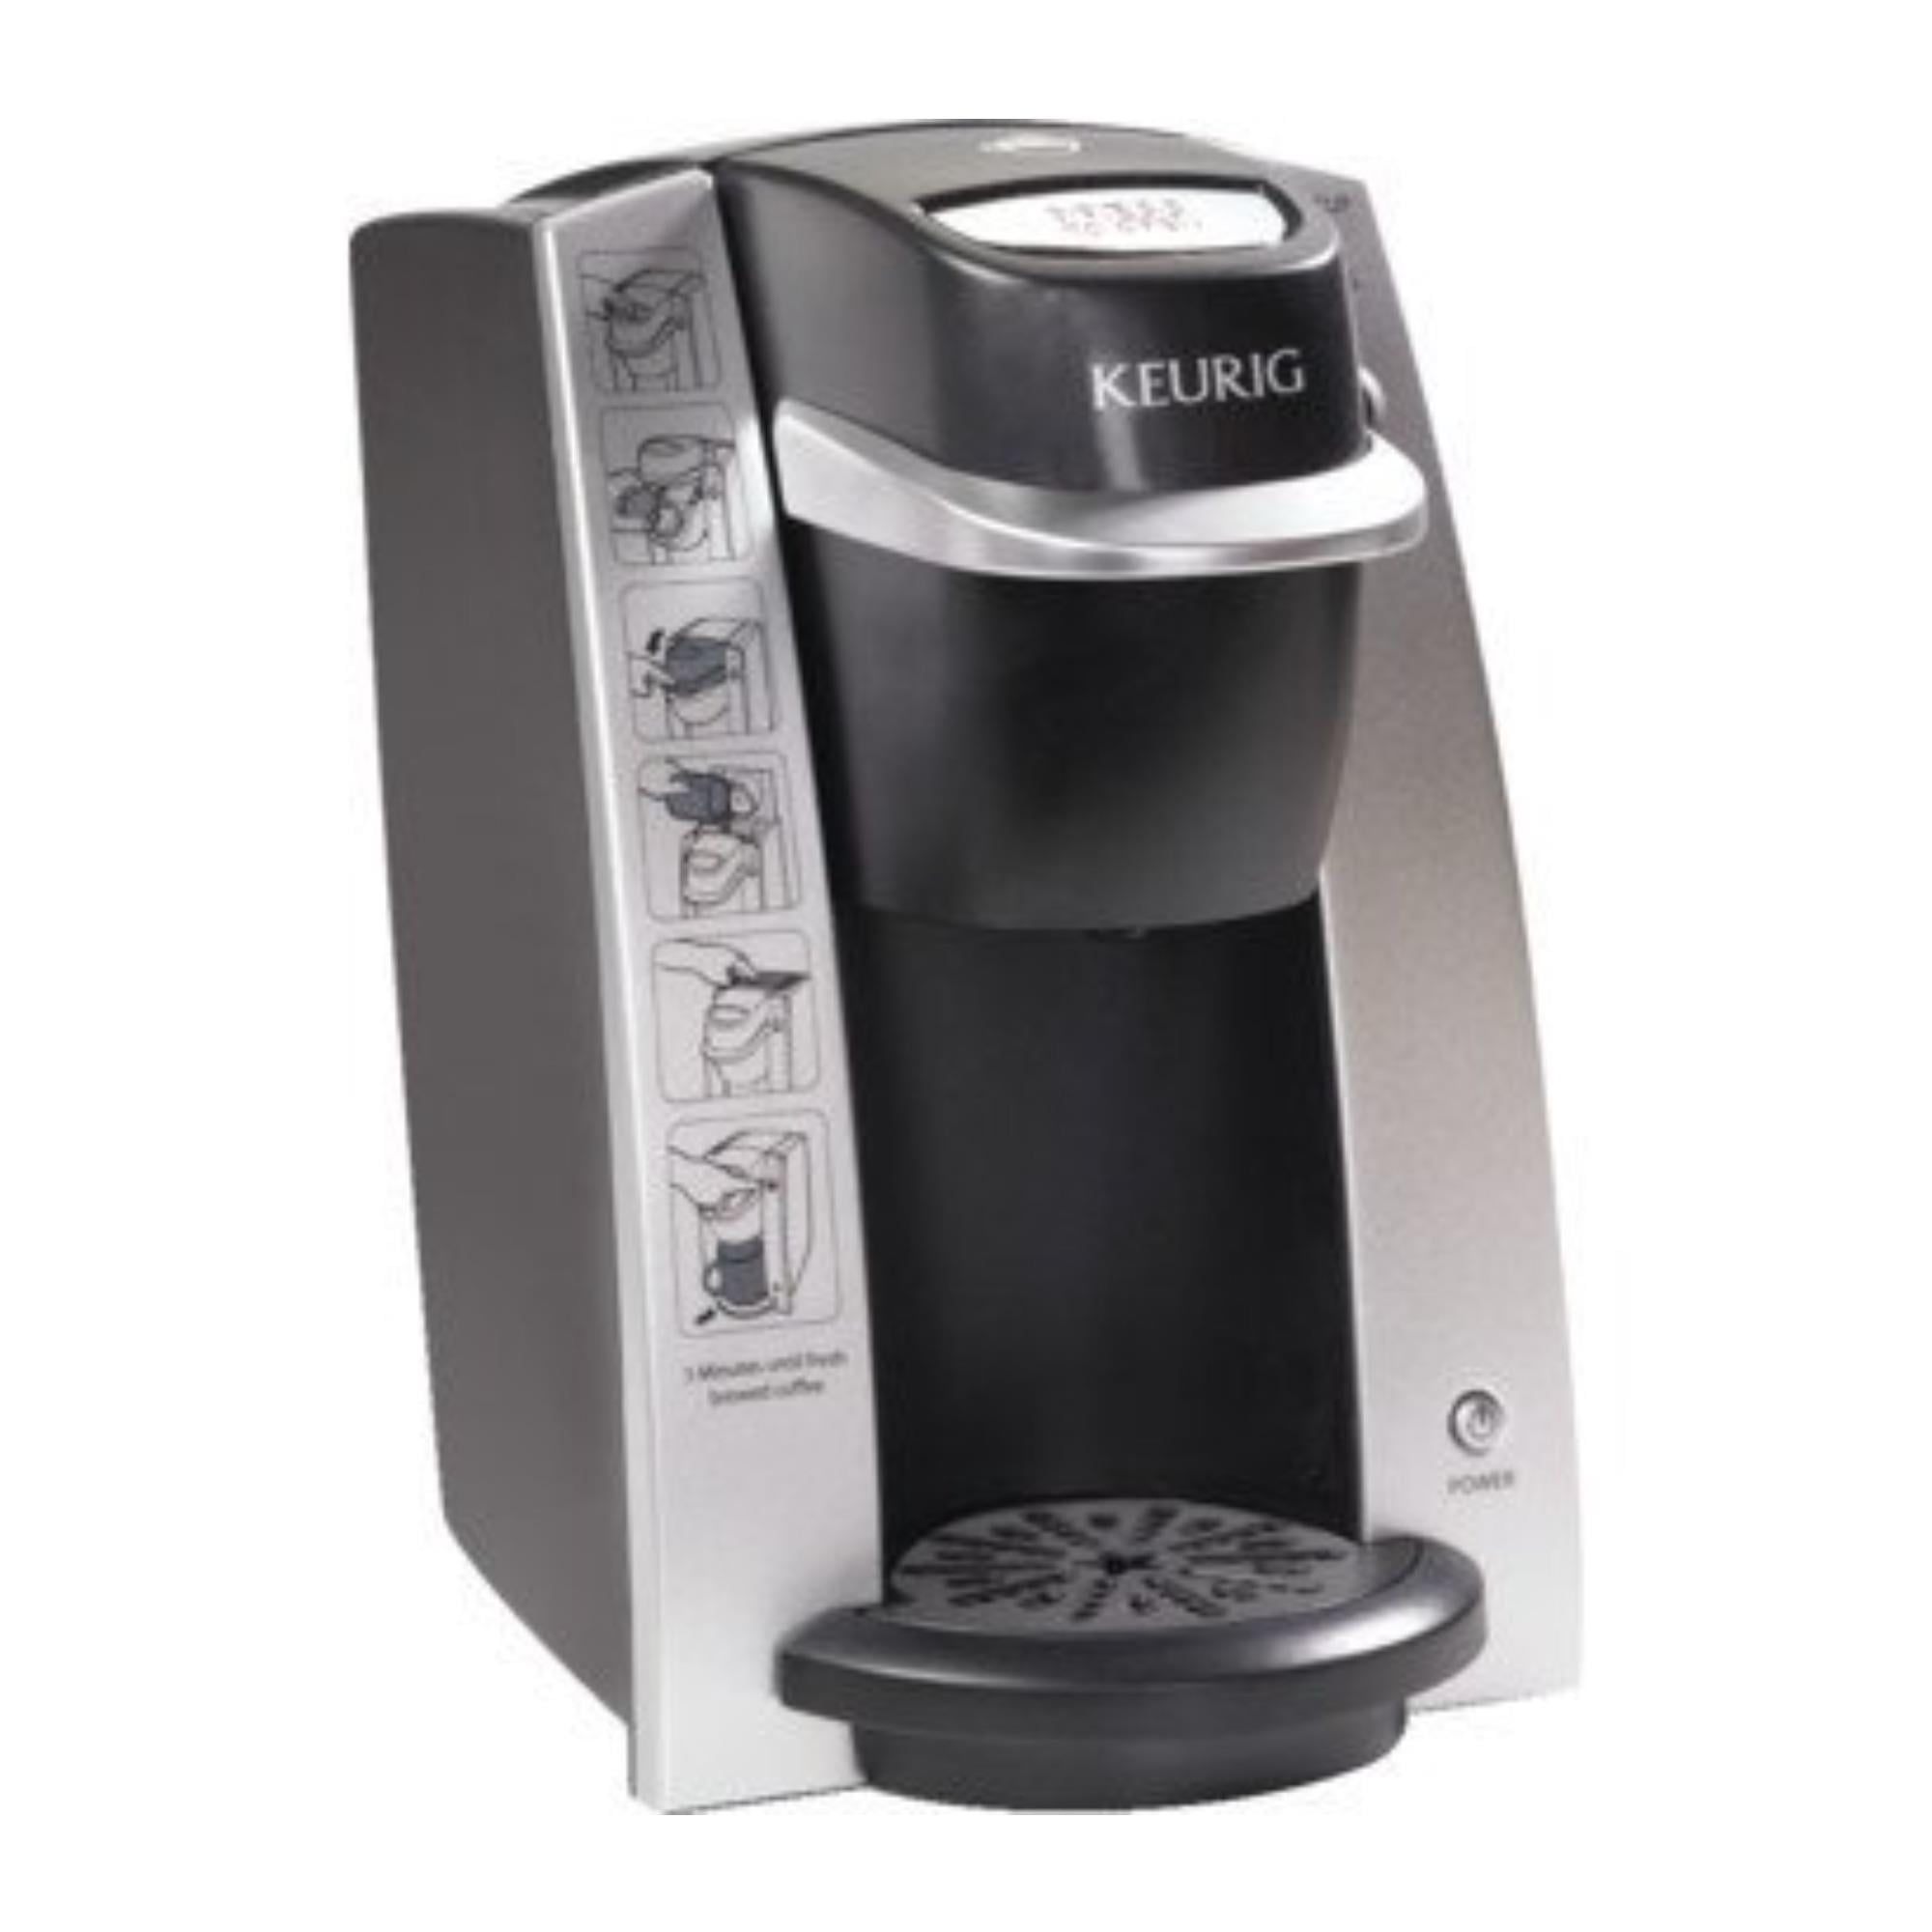 USED Keurig B130 K130 1 Cup Coffee And Espresso Maker 